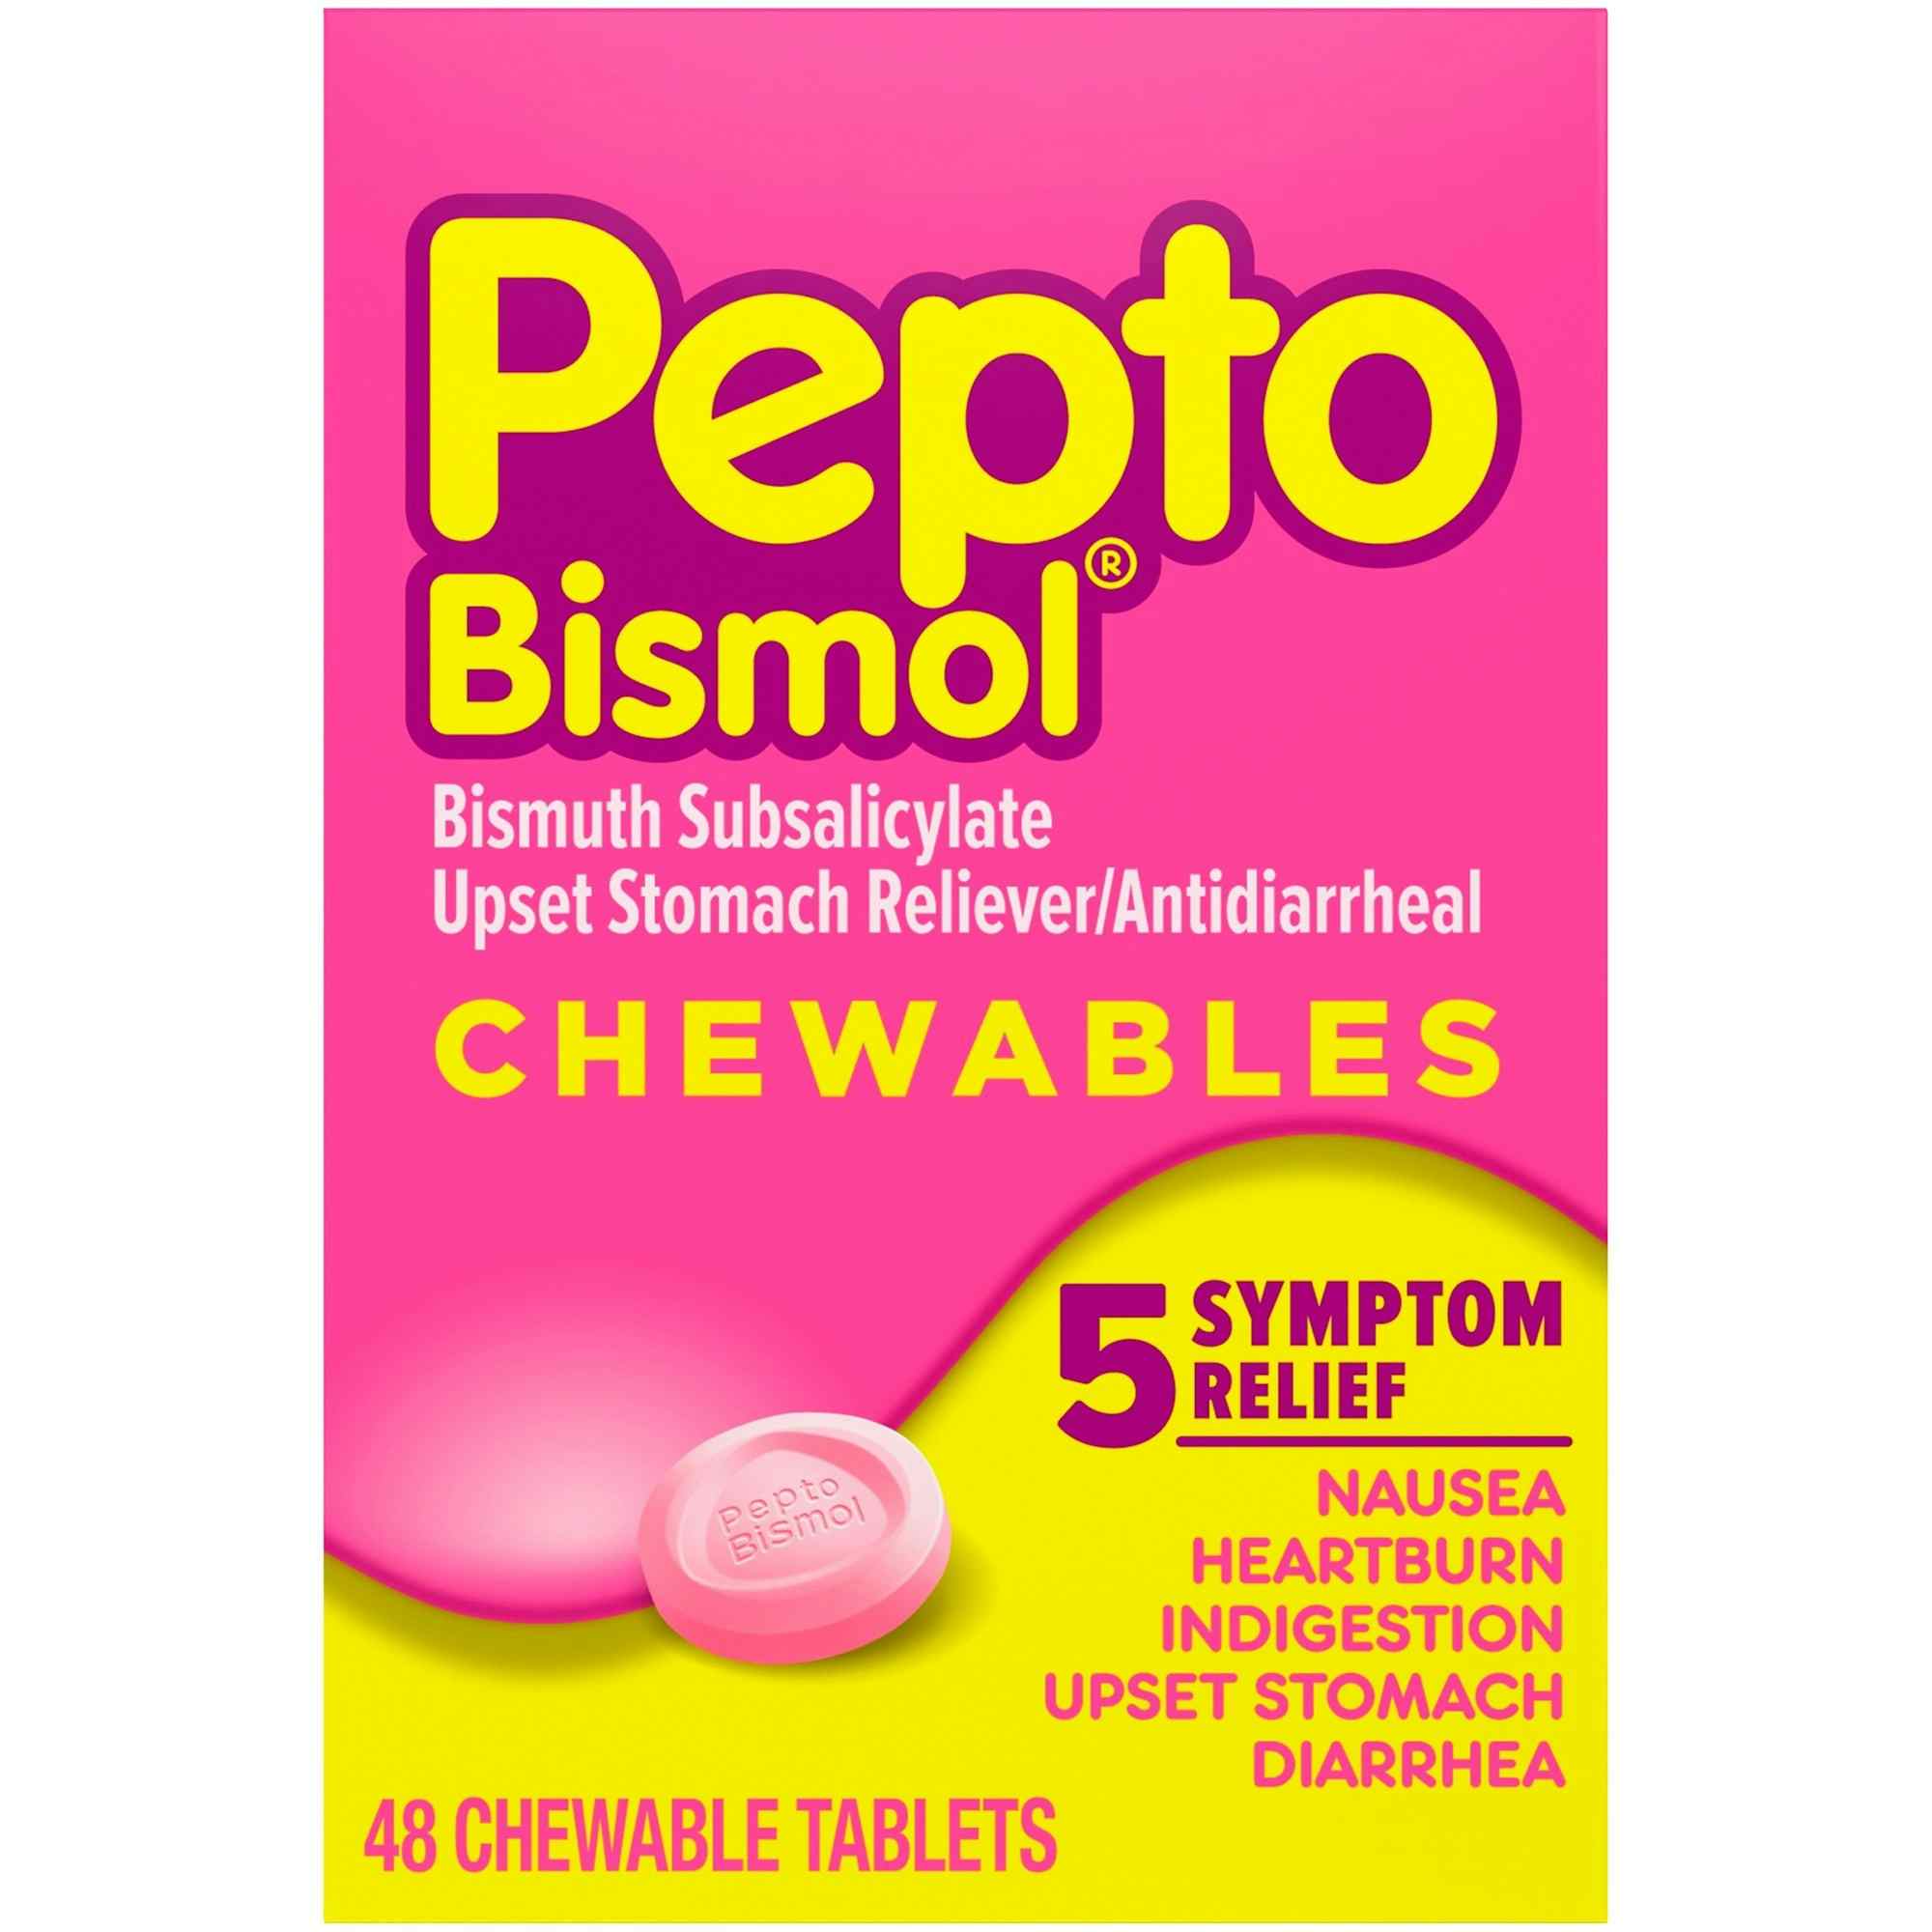 Pepto Bismol Upset Stomach Reliever/Anti-Diarrheal Chewables, 262 mg